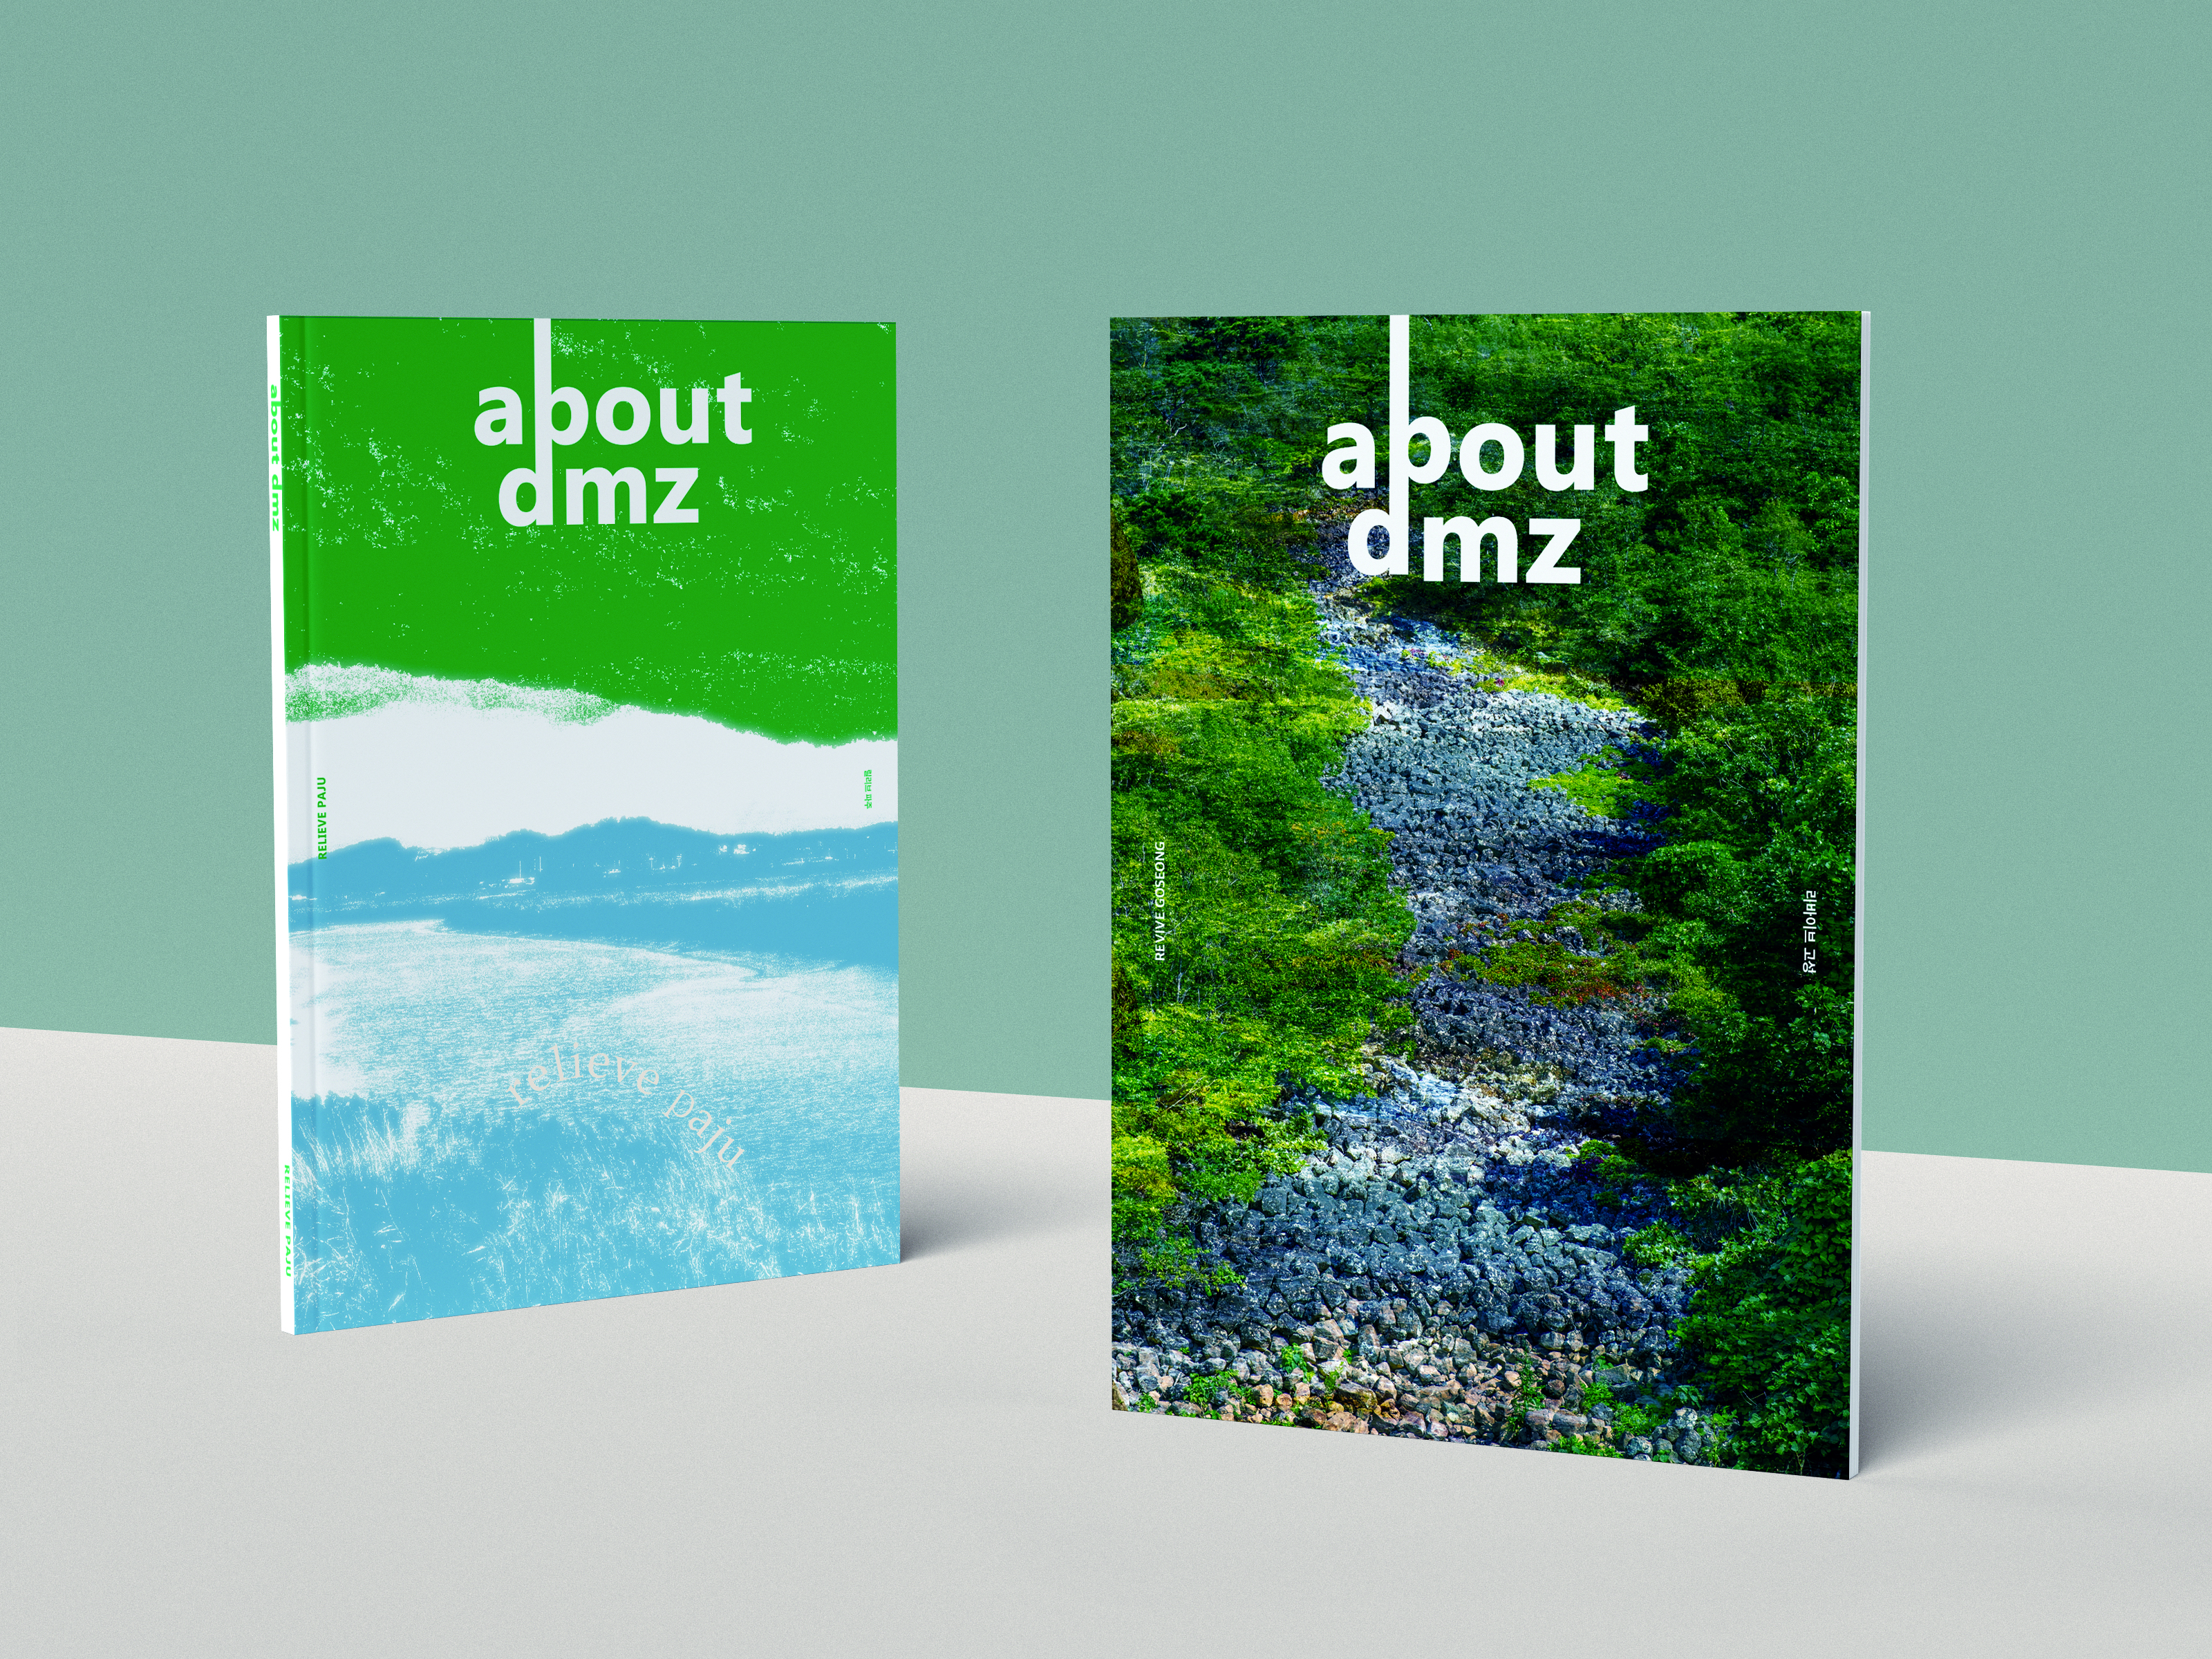 Untold Stories About the DMZ